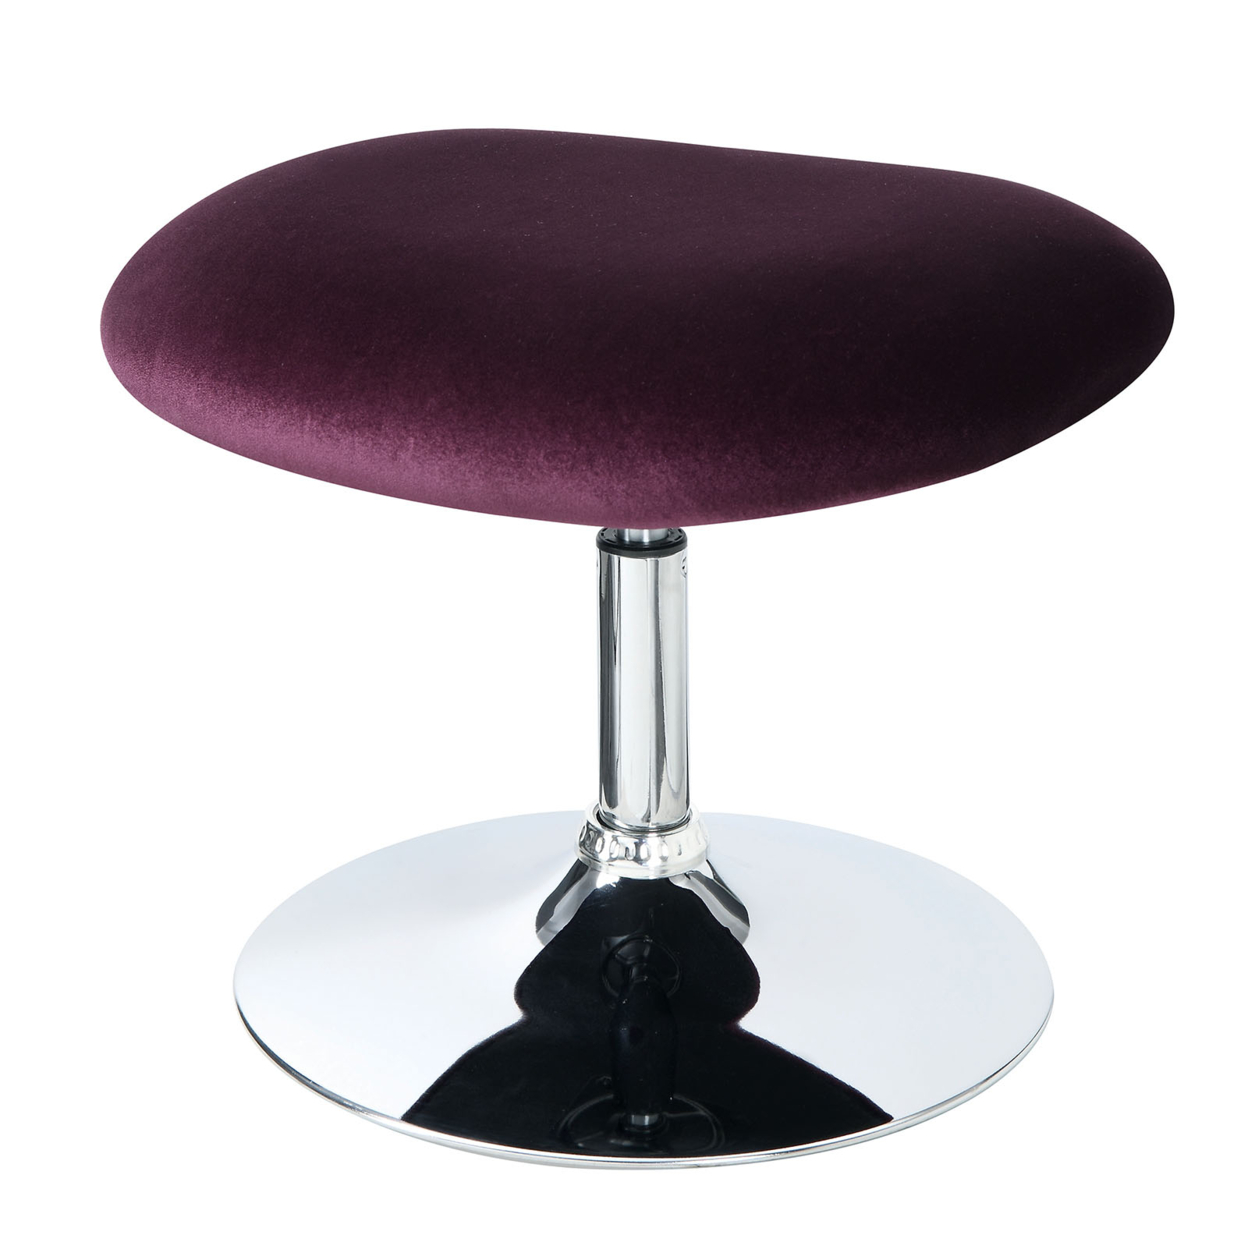 Fabric Curved Design Chair With Ottoman And Tubular Base, Set Of 2, Purple- Saltoro Sherpi